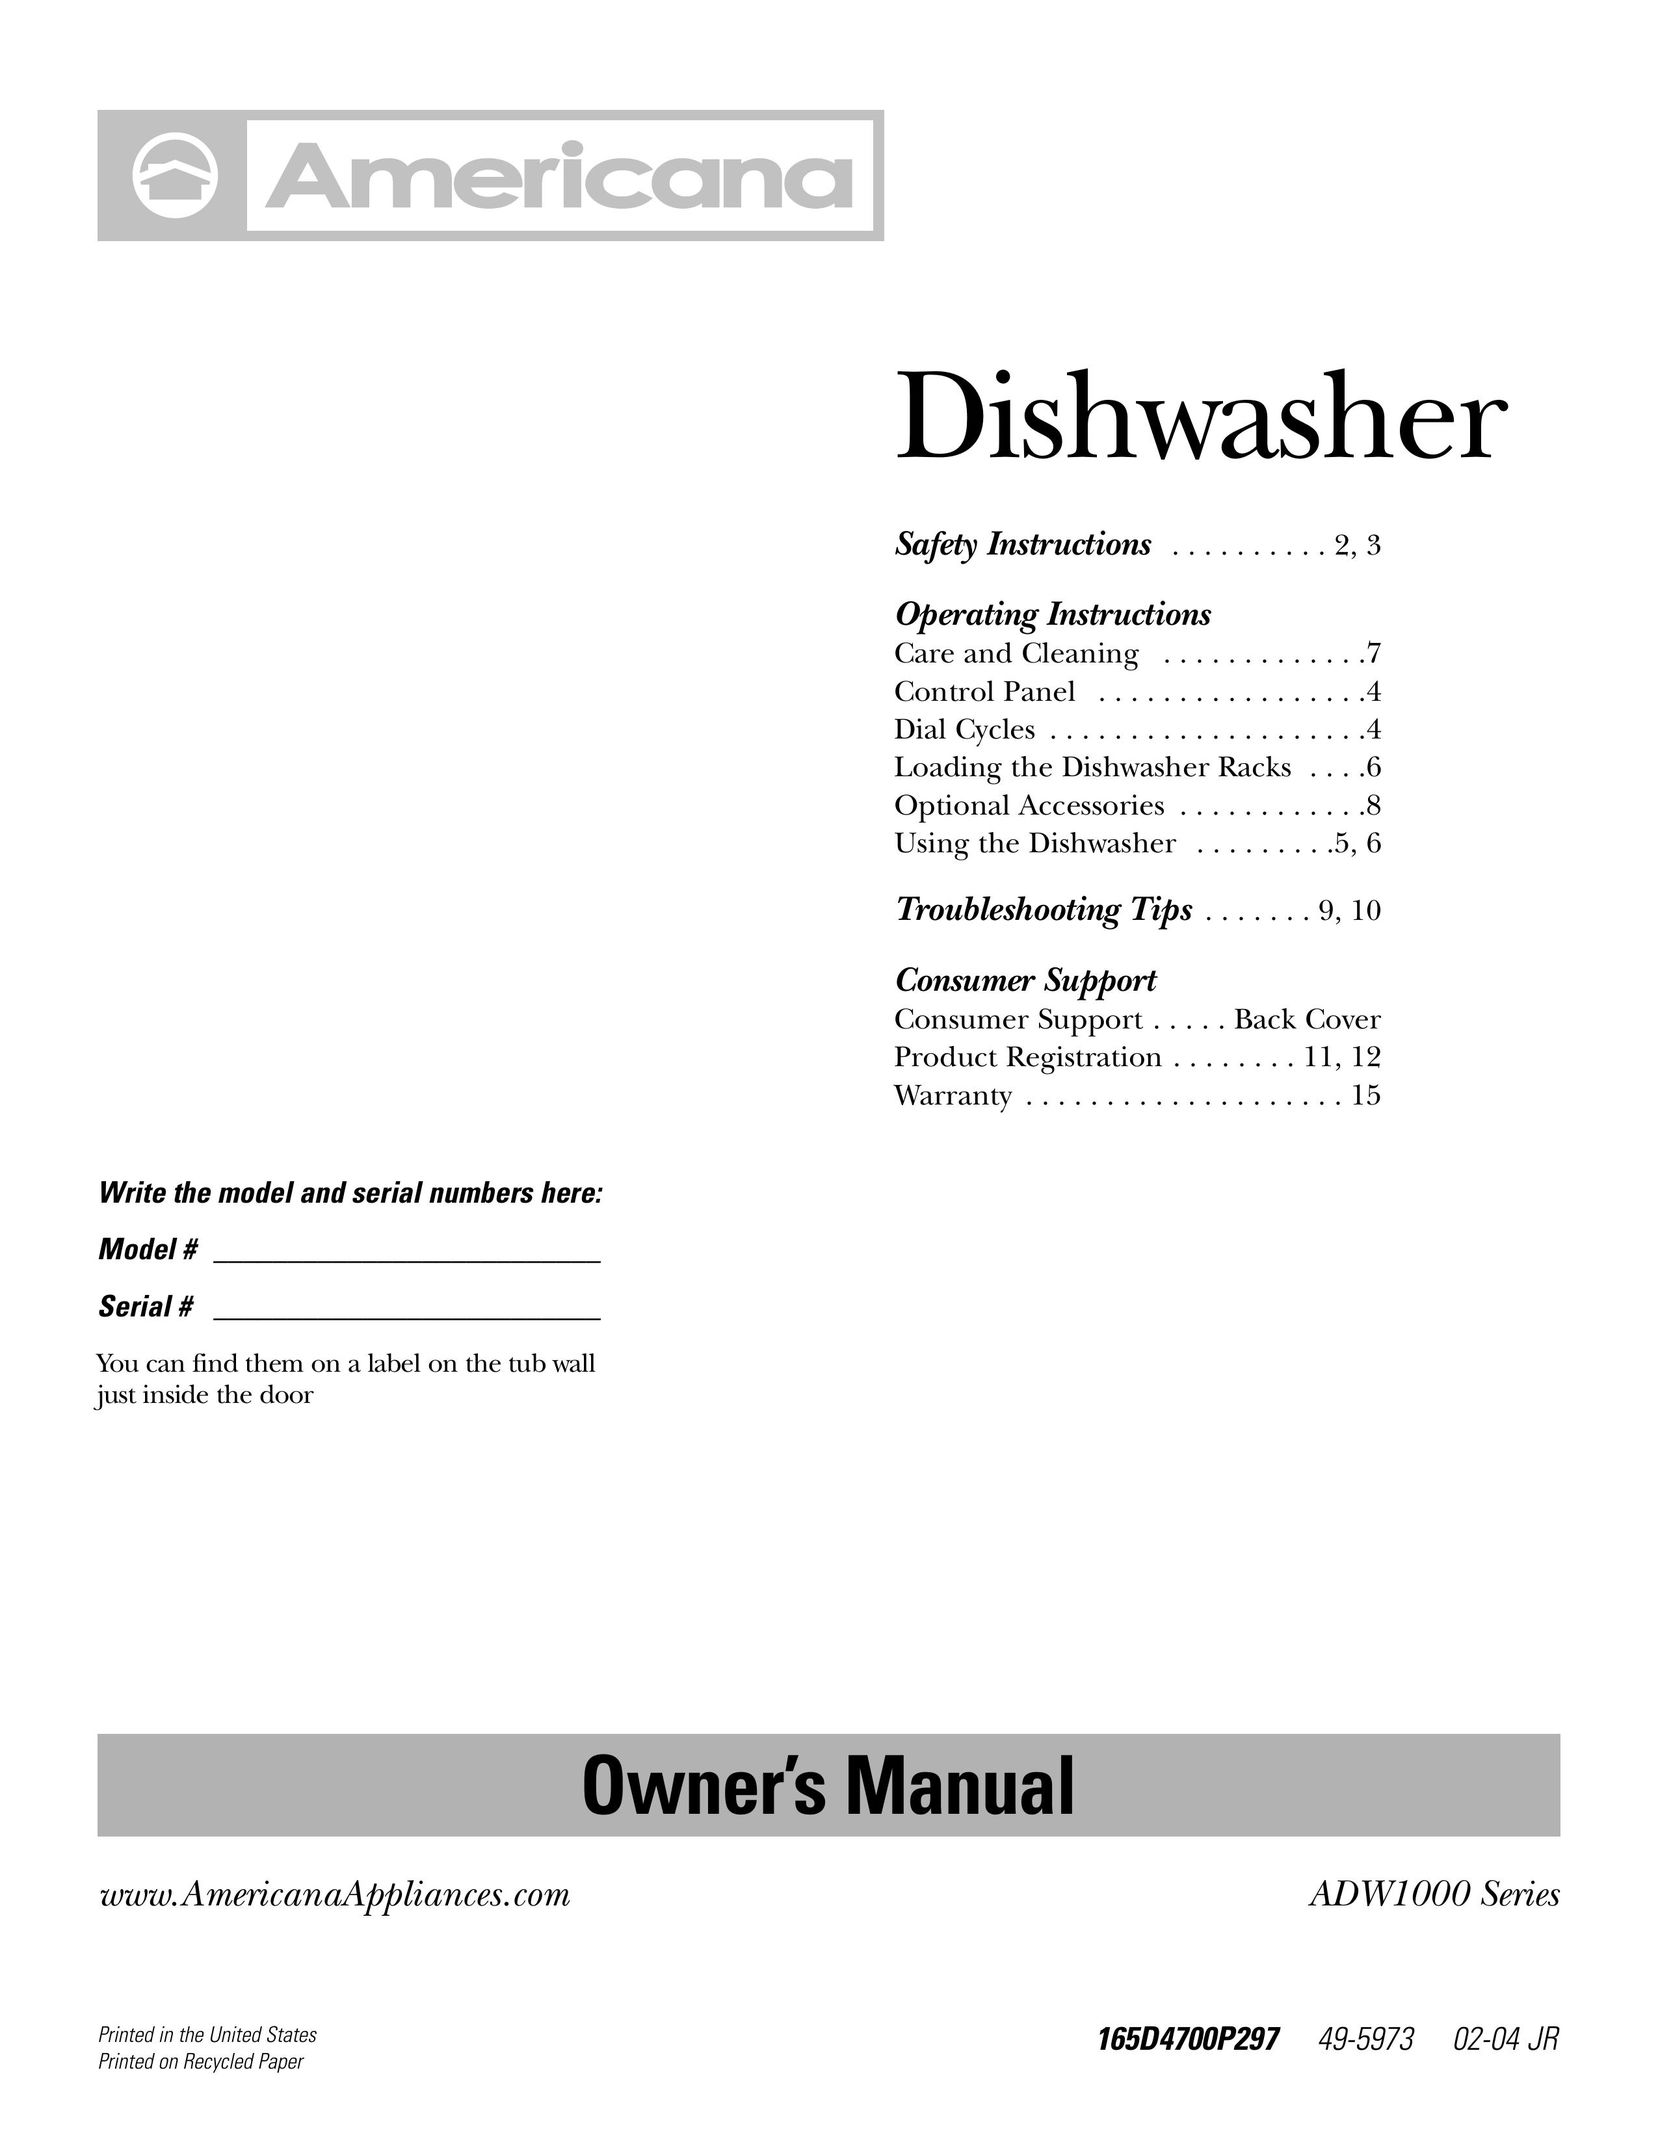 Americana Appliances ADW1000 series Dishwasher User Manual